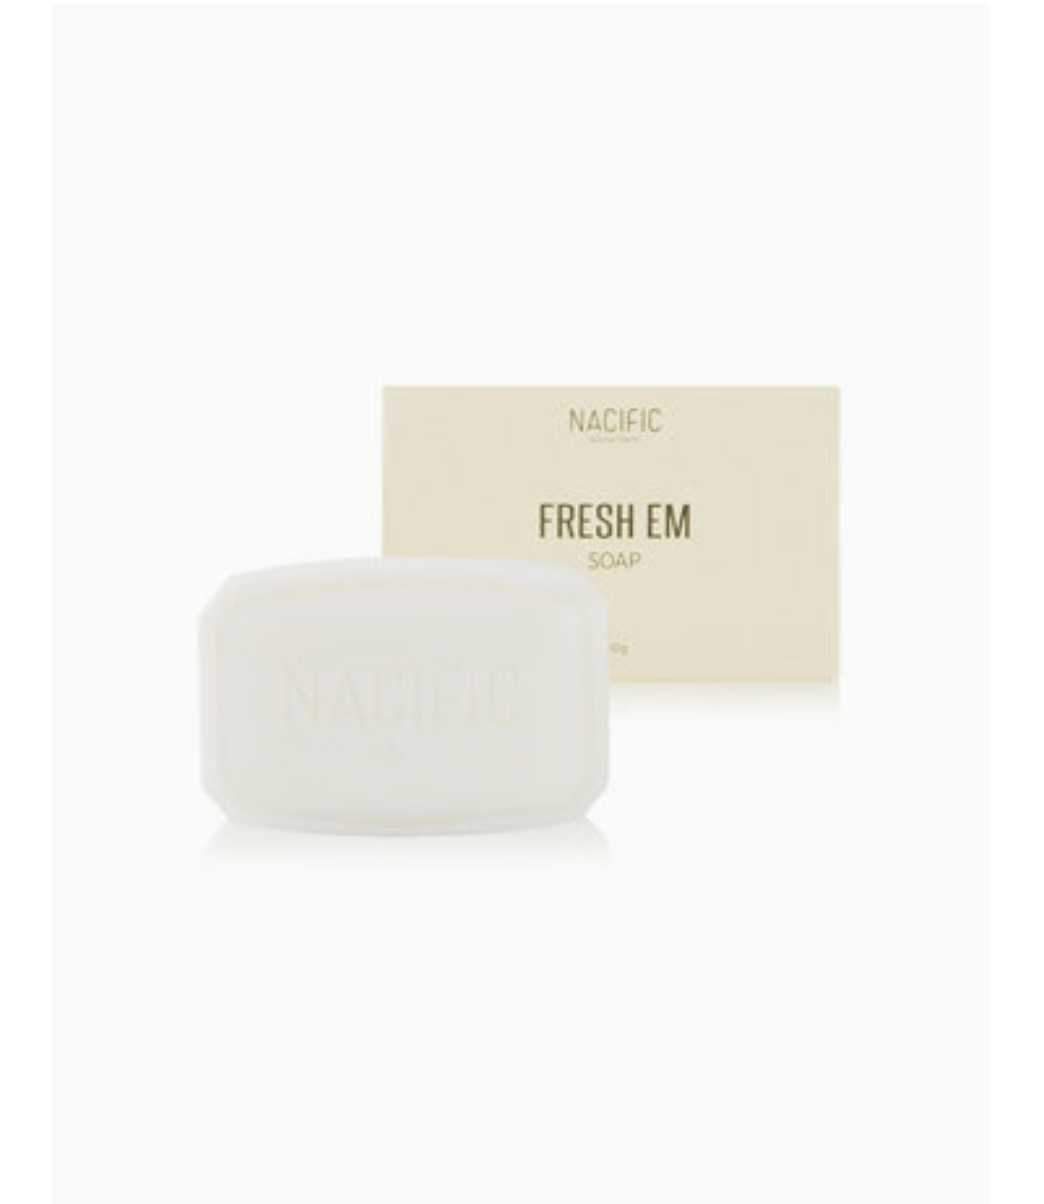 Nacific Fresh EM soap